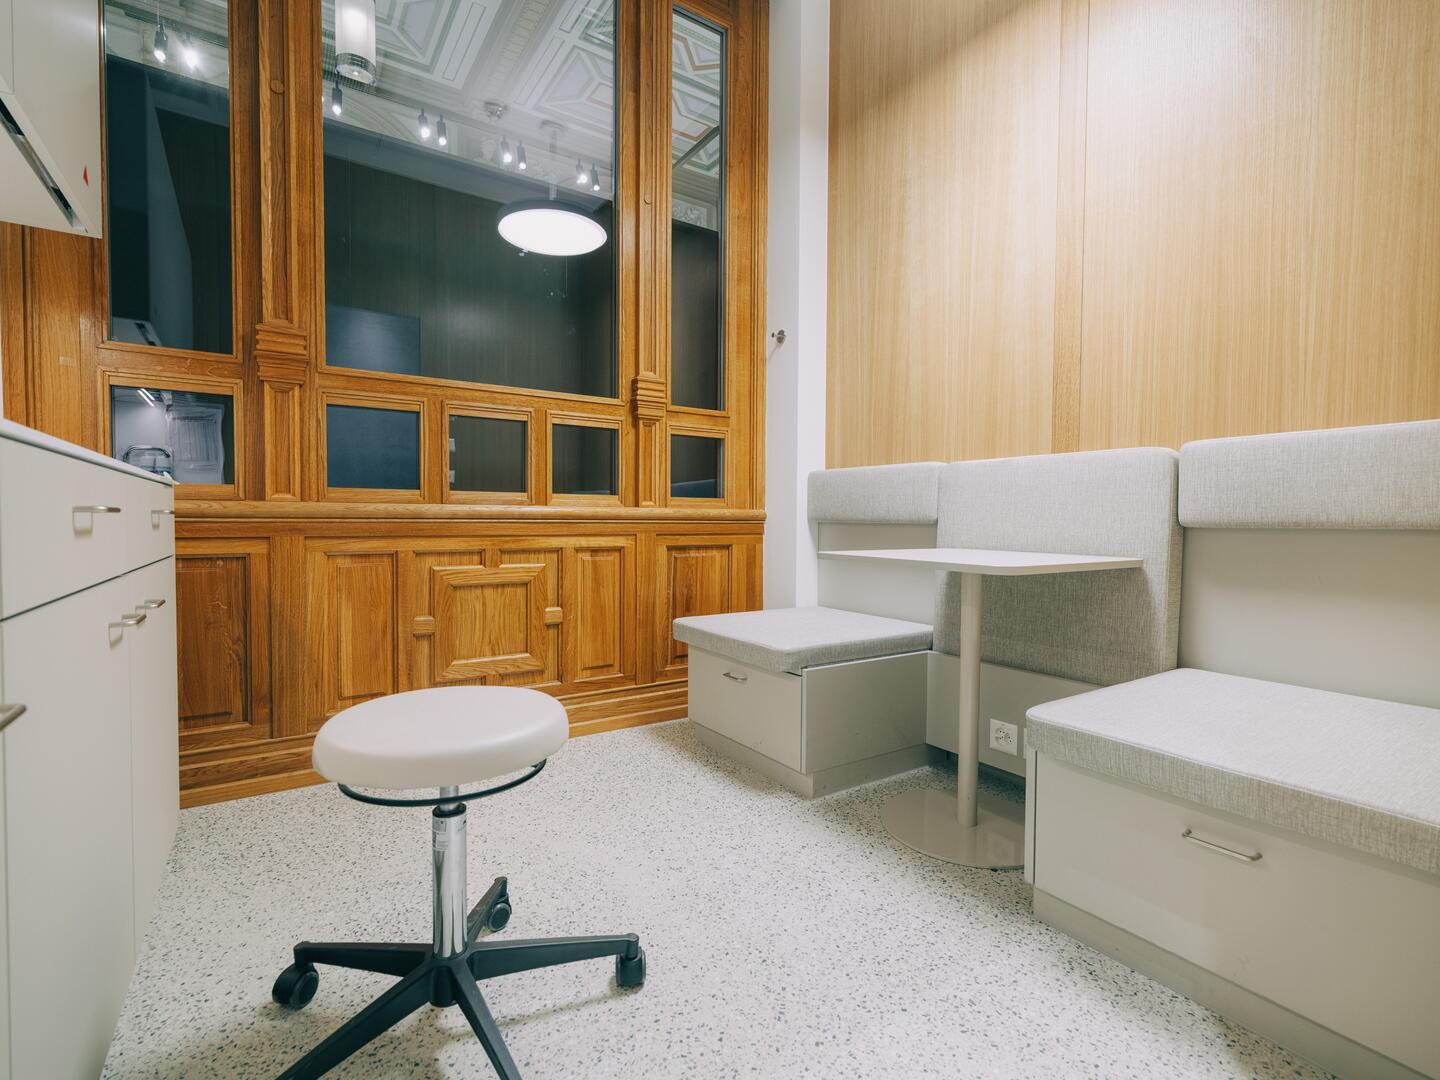 Salle de soins, équipement moderne